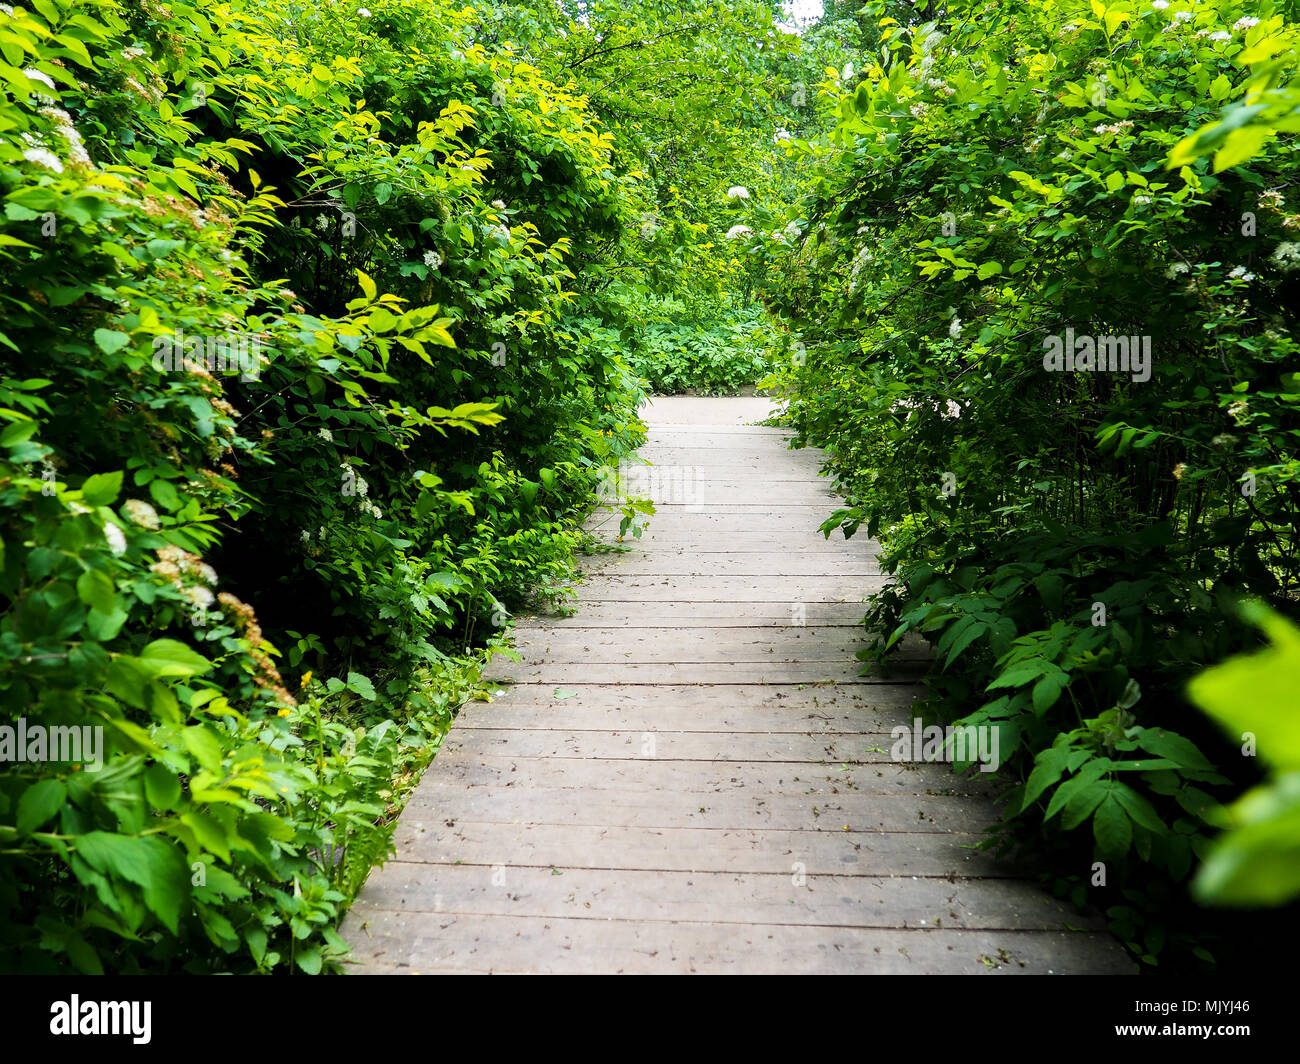 Holzbrücke auf dem Weg ist mit grünem Gras gefüllt. Schöne Natur. Stockfoto